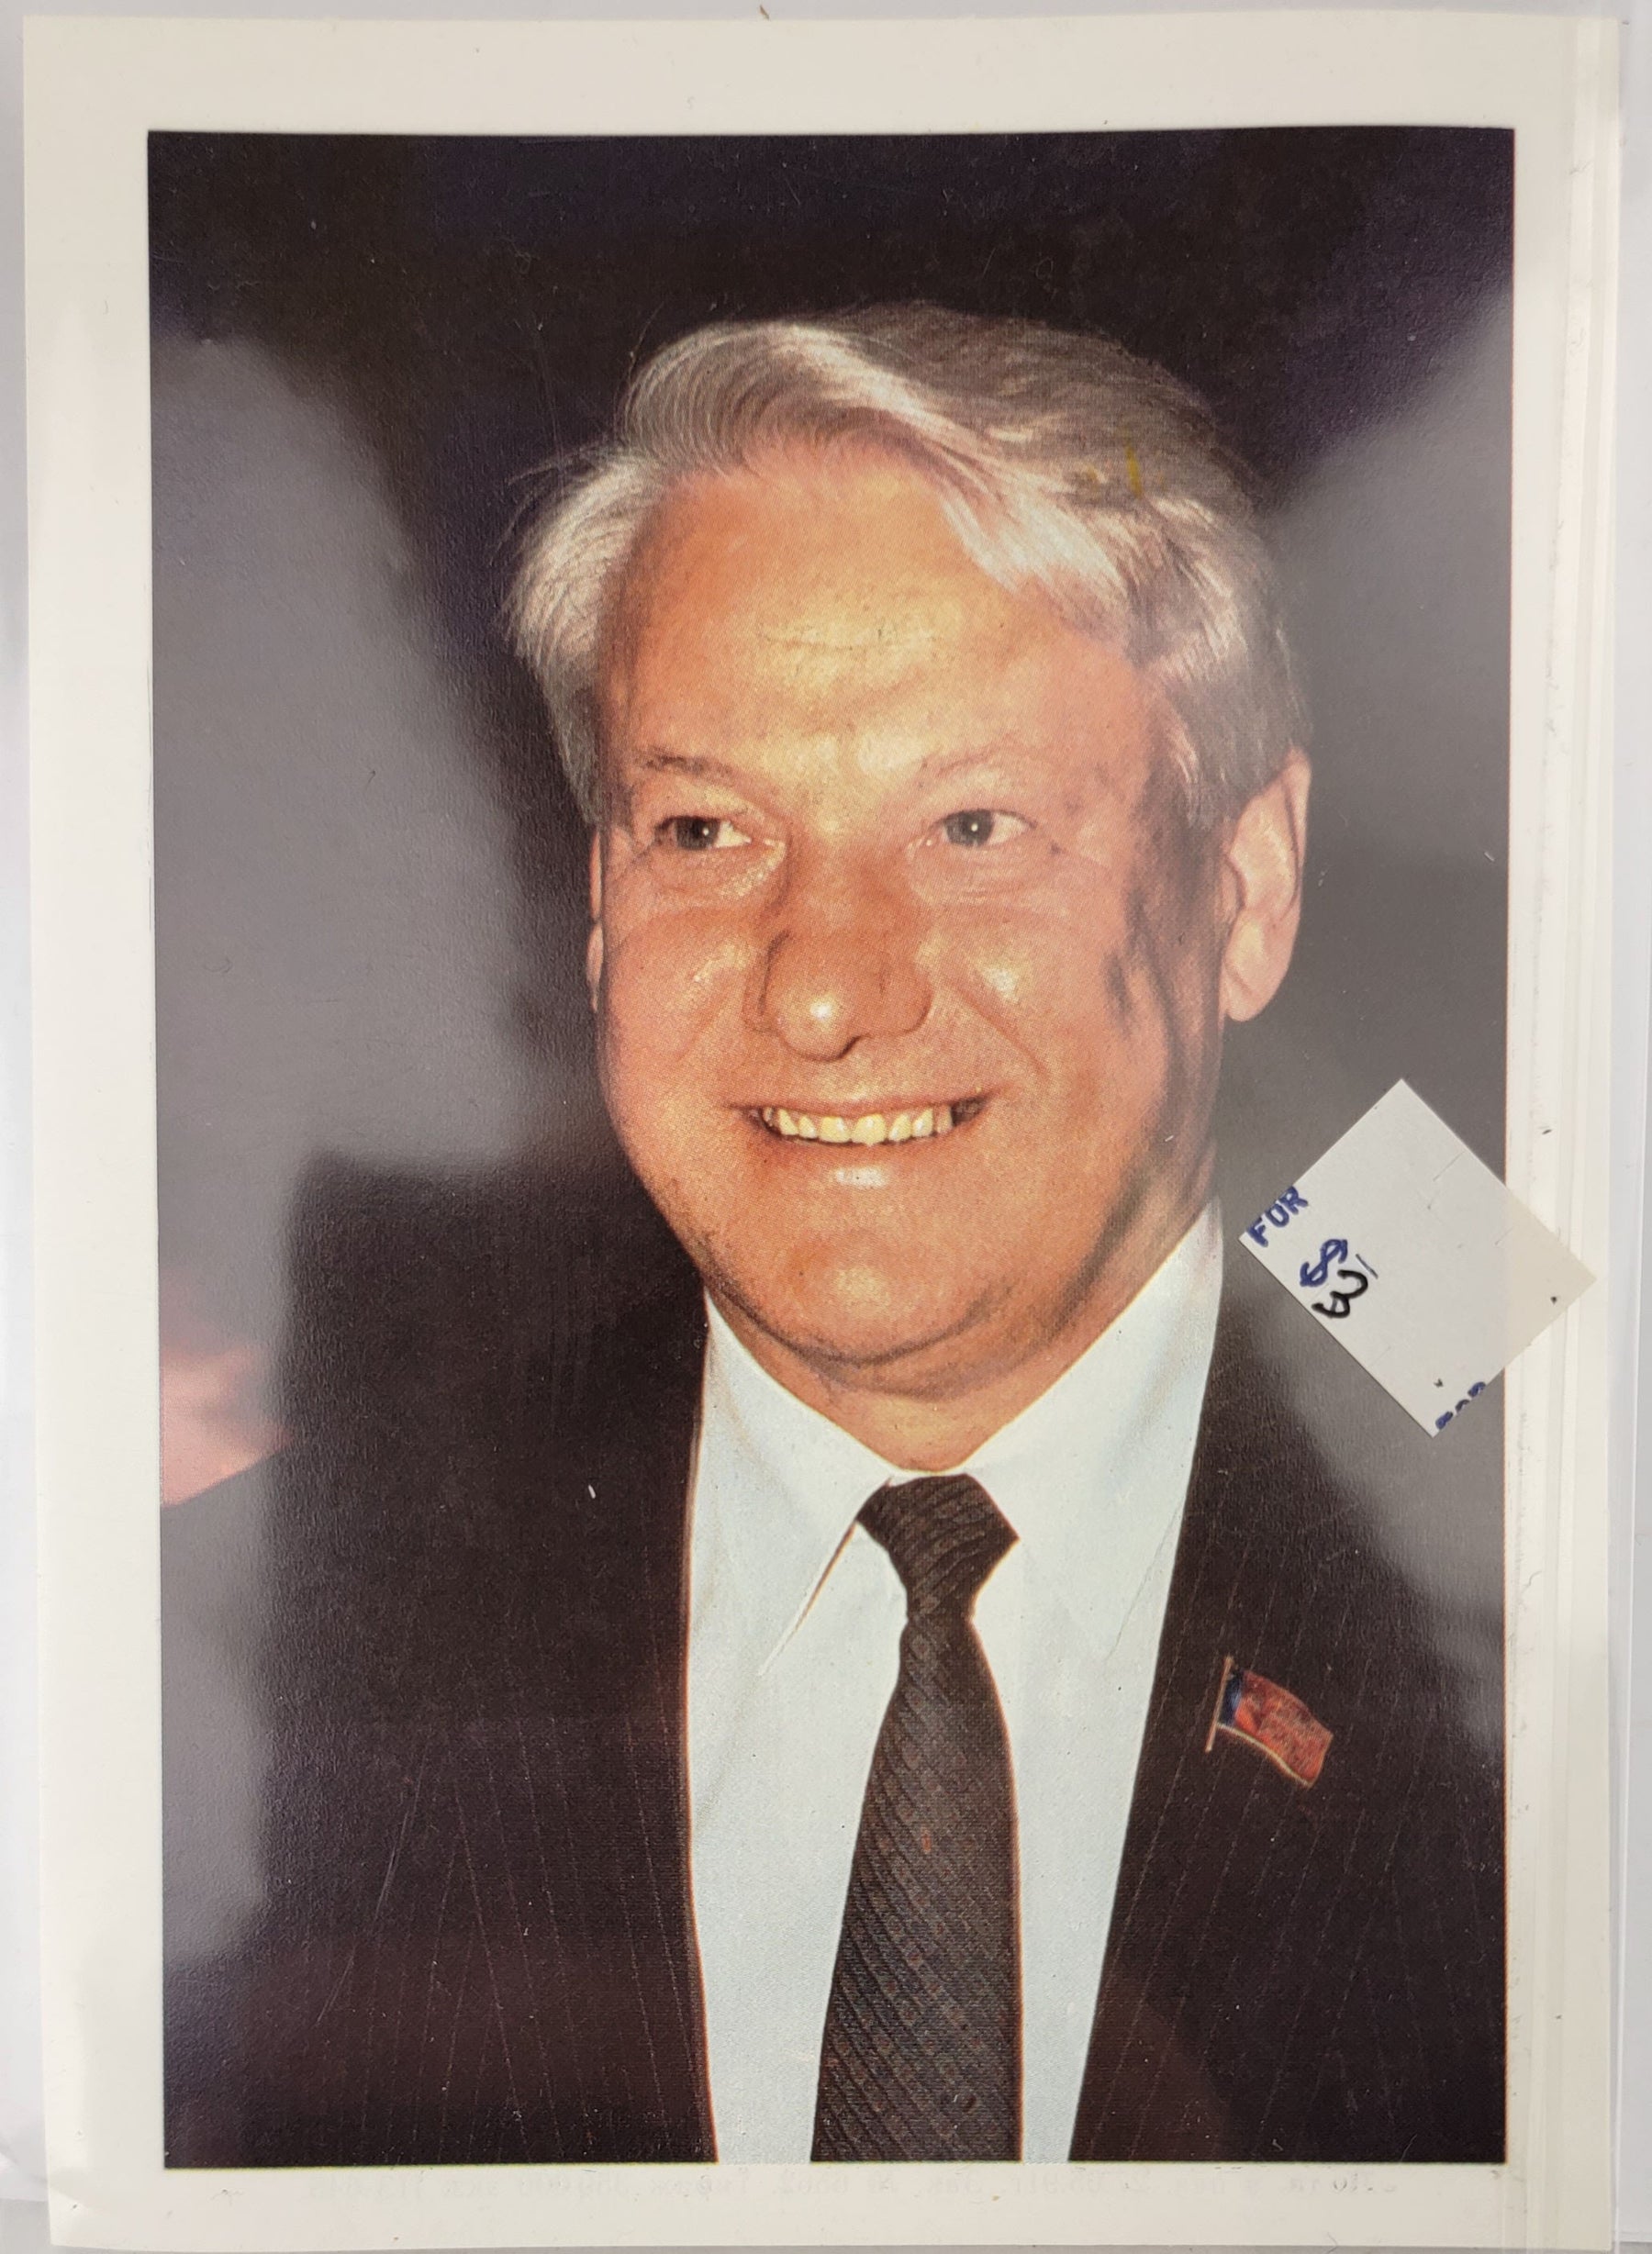 Russian President Boris Yeltsin Collector Card Dated 1991